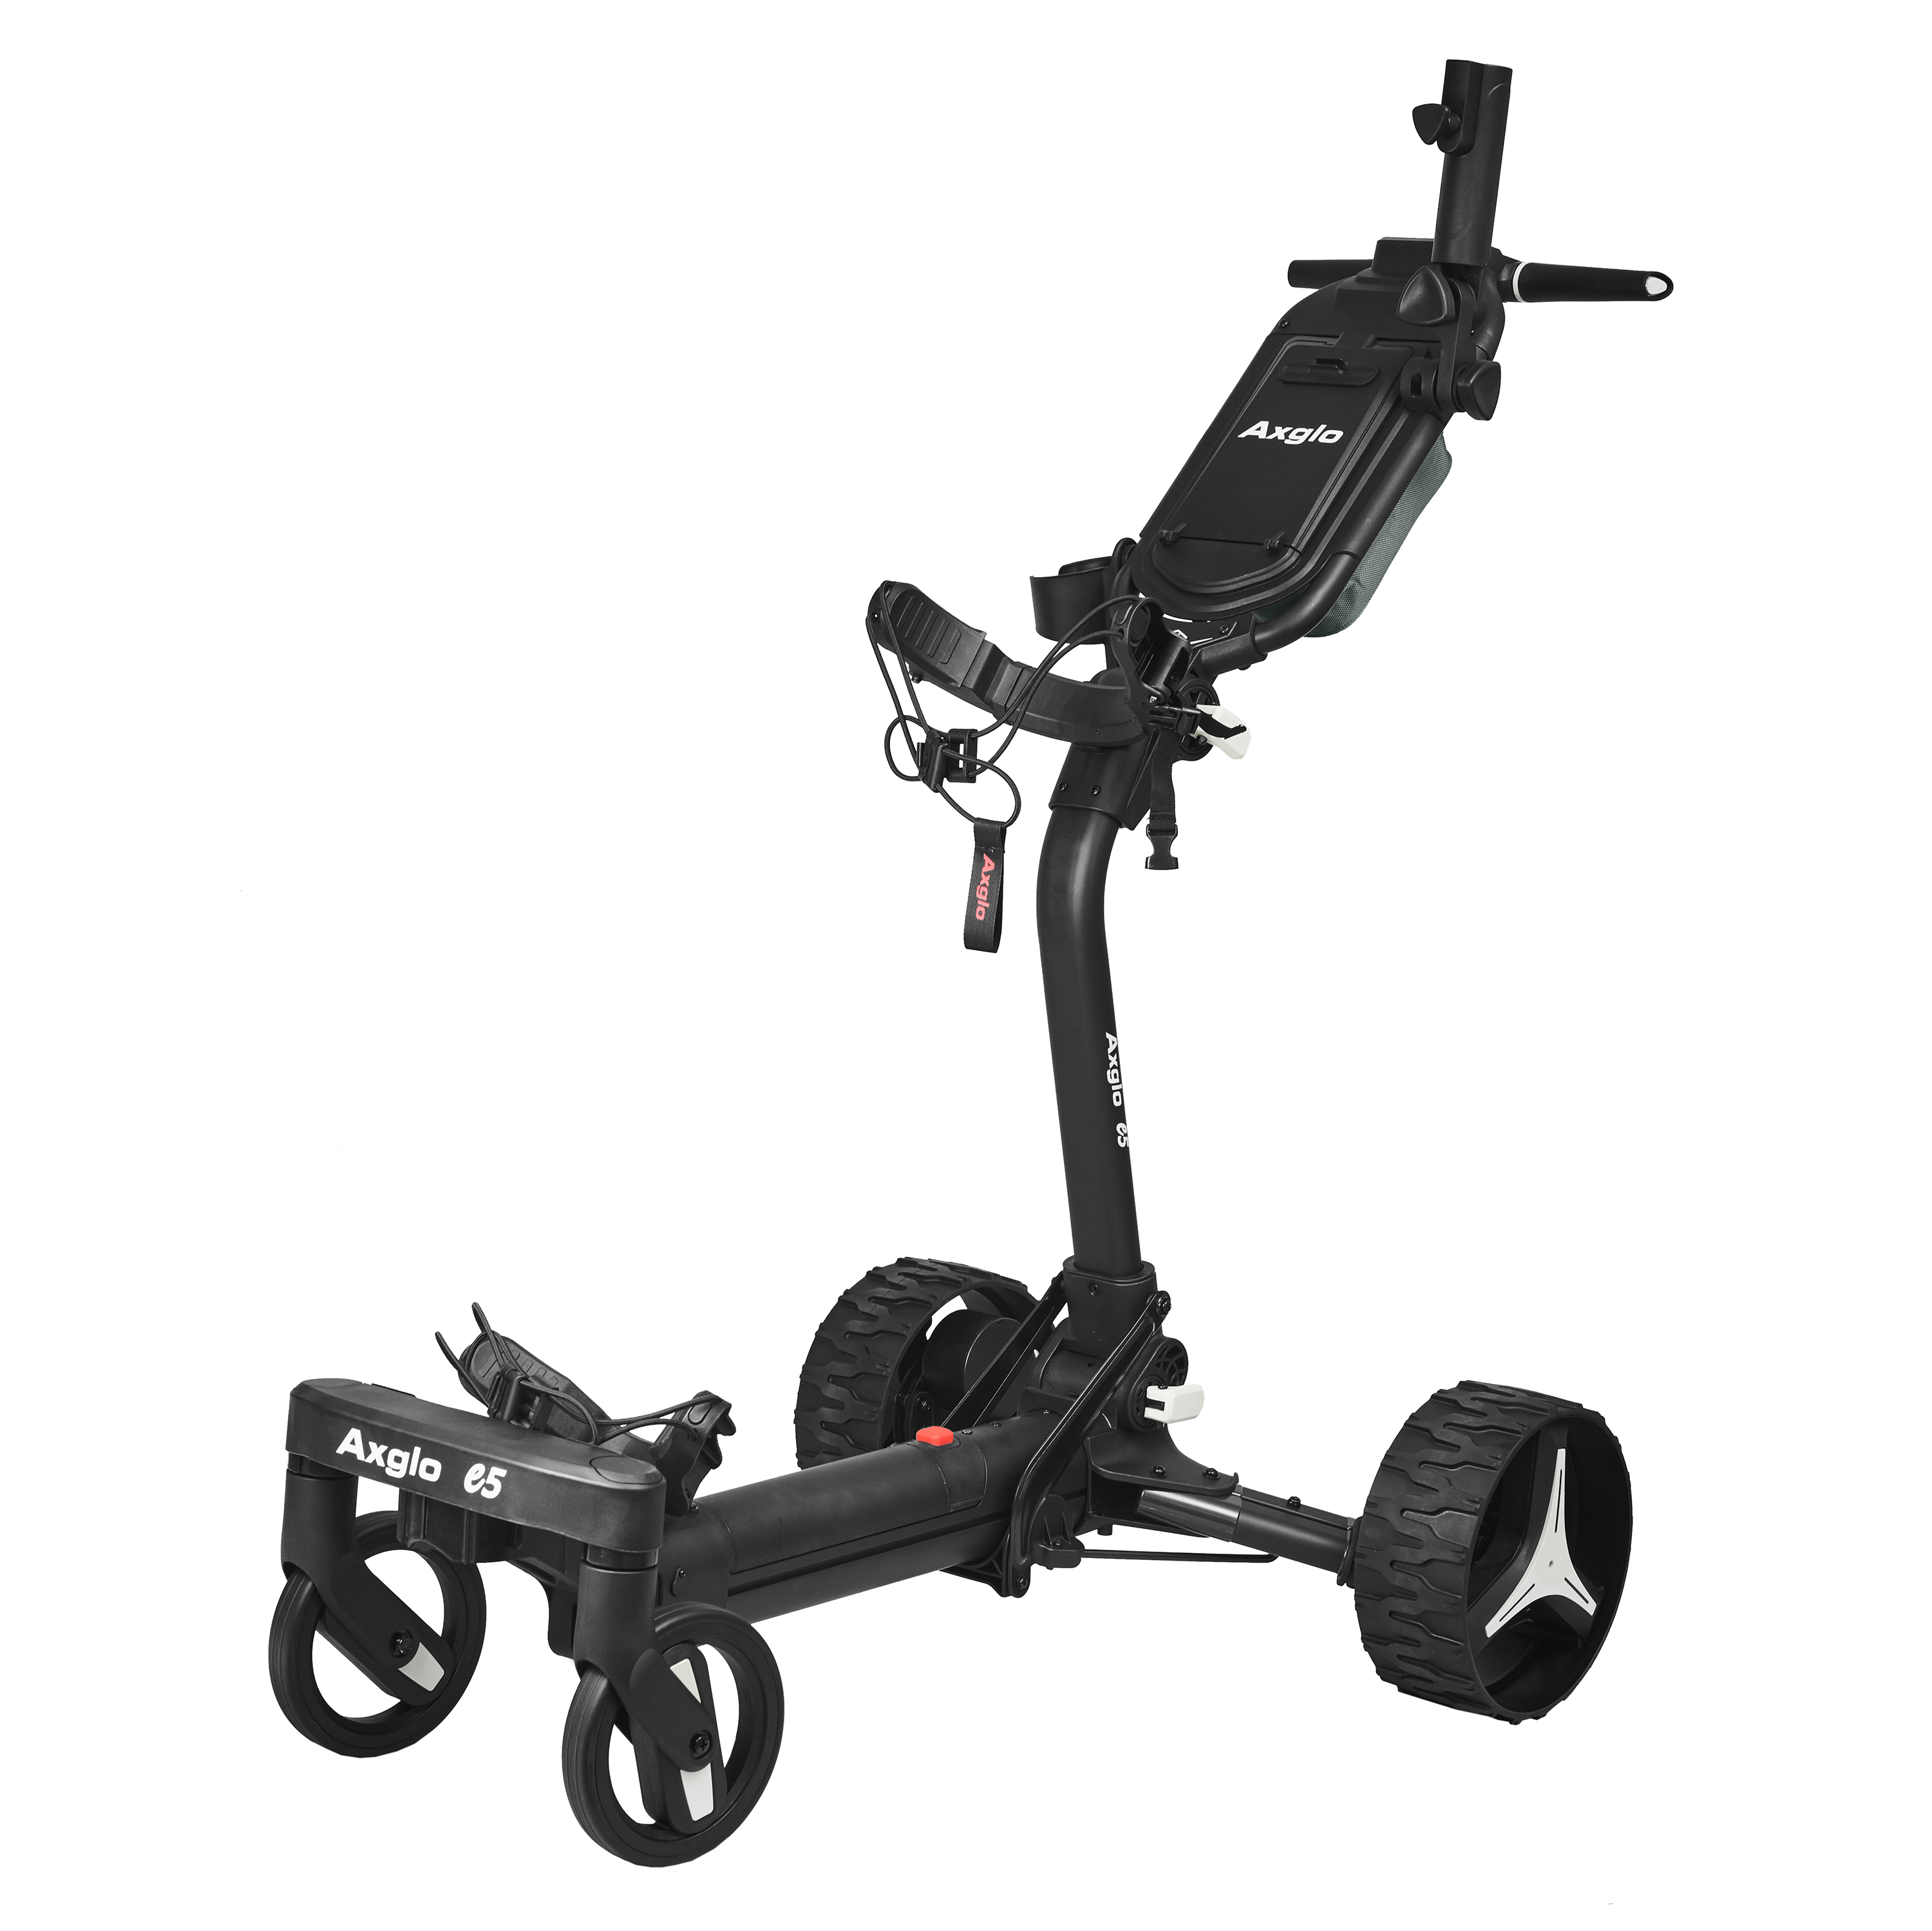 Axglo e5 - Electric Golf Push Cart (Ultra Battery)